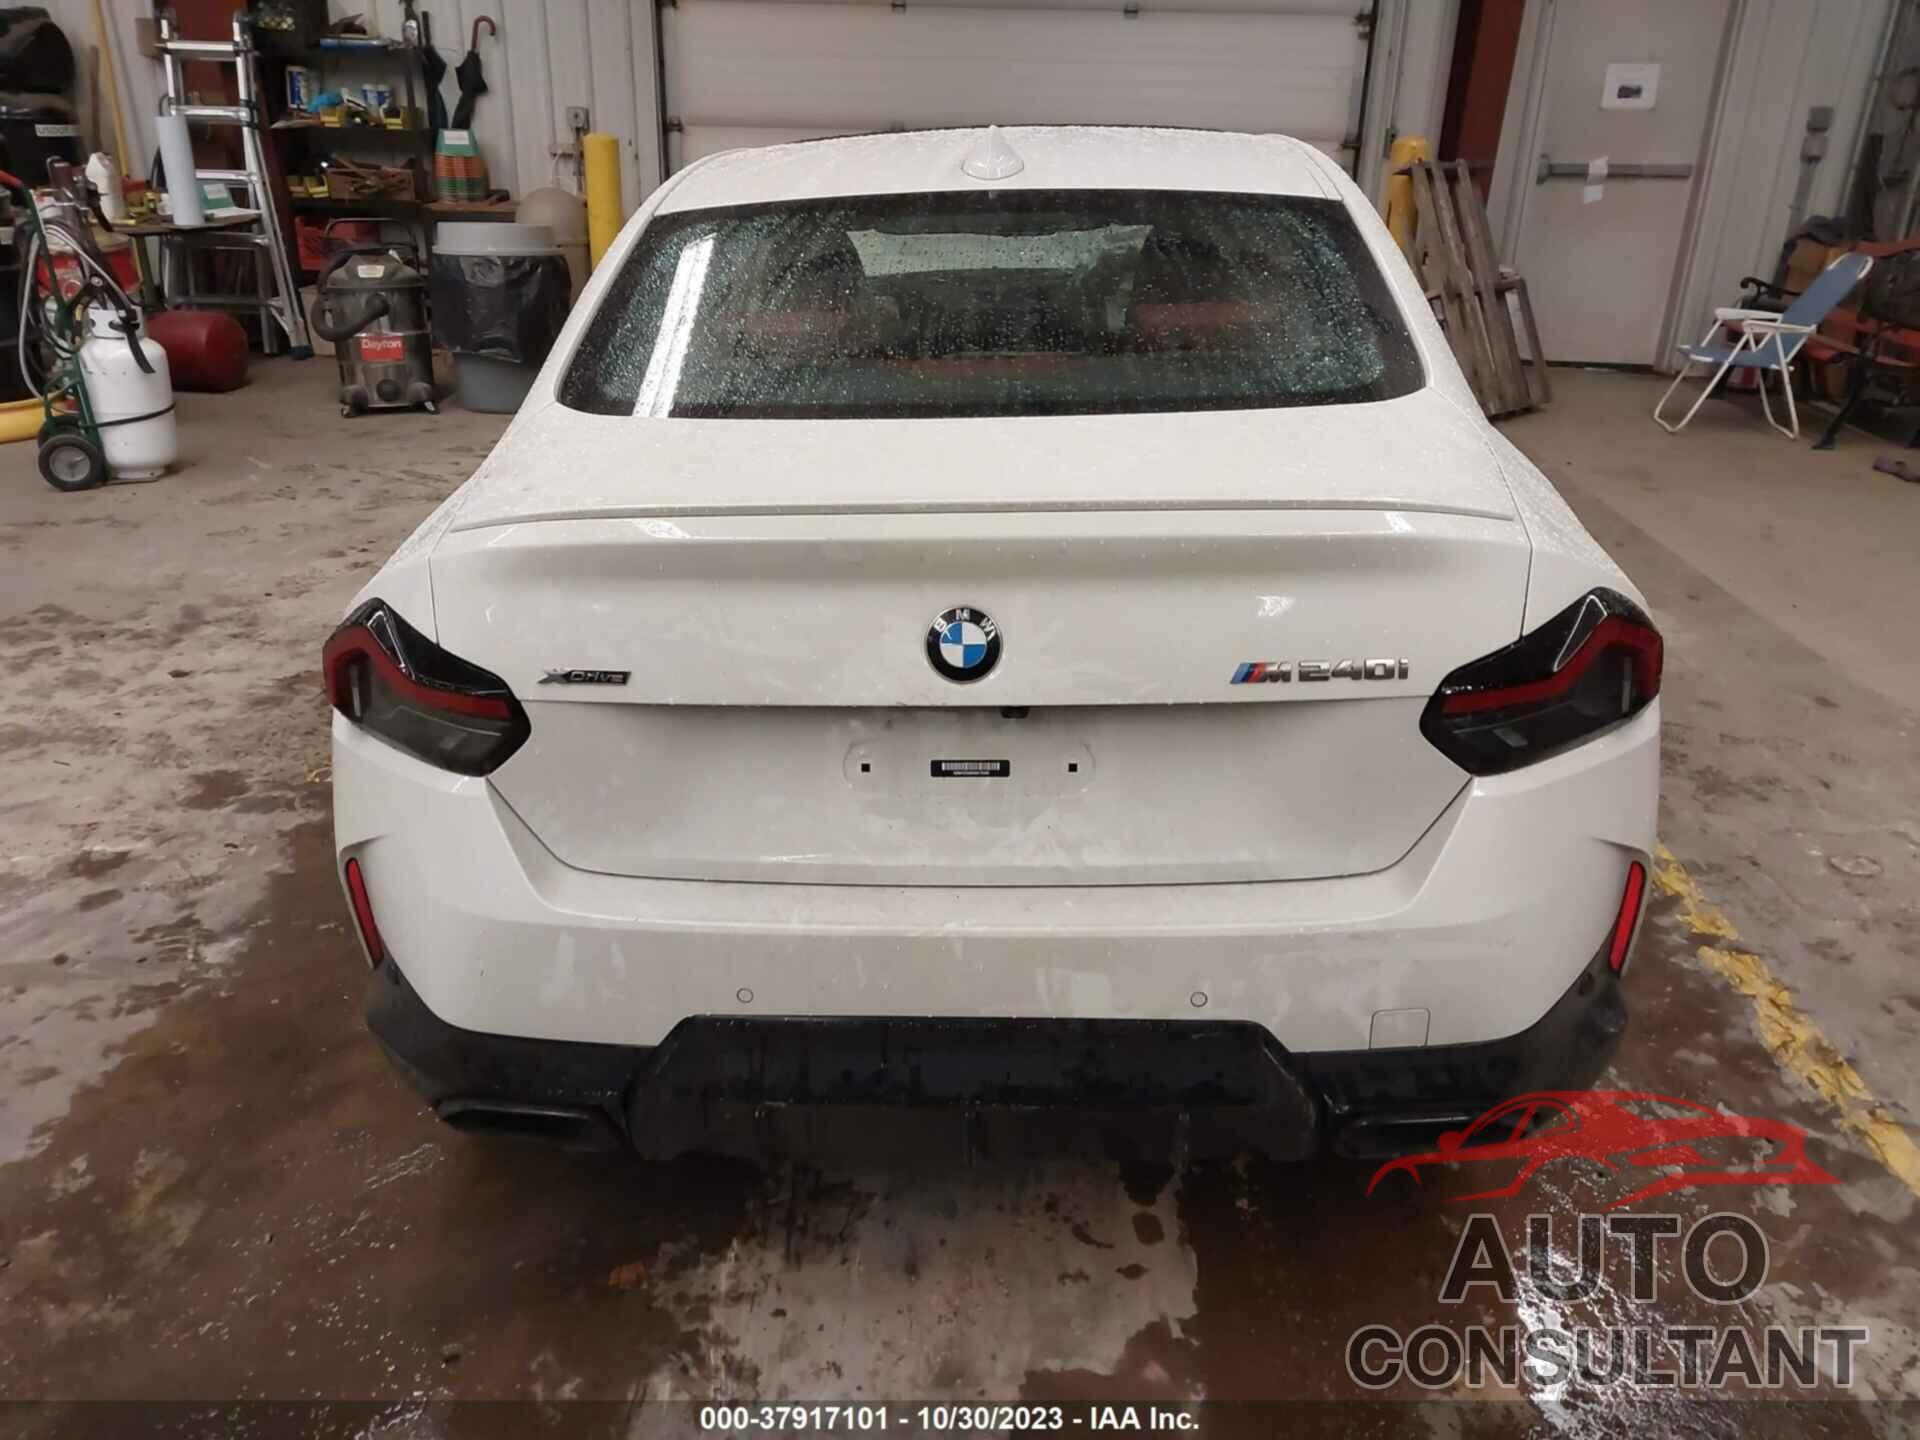 BMW 2 SERIES 2022 - 3MW53CM09N8C76308